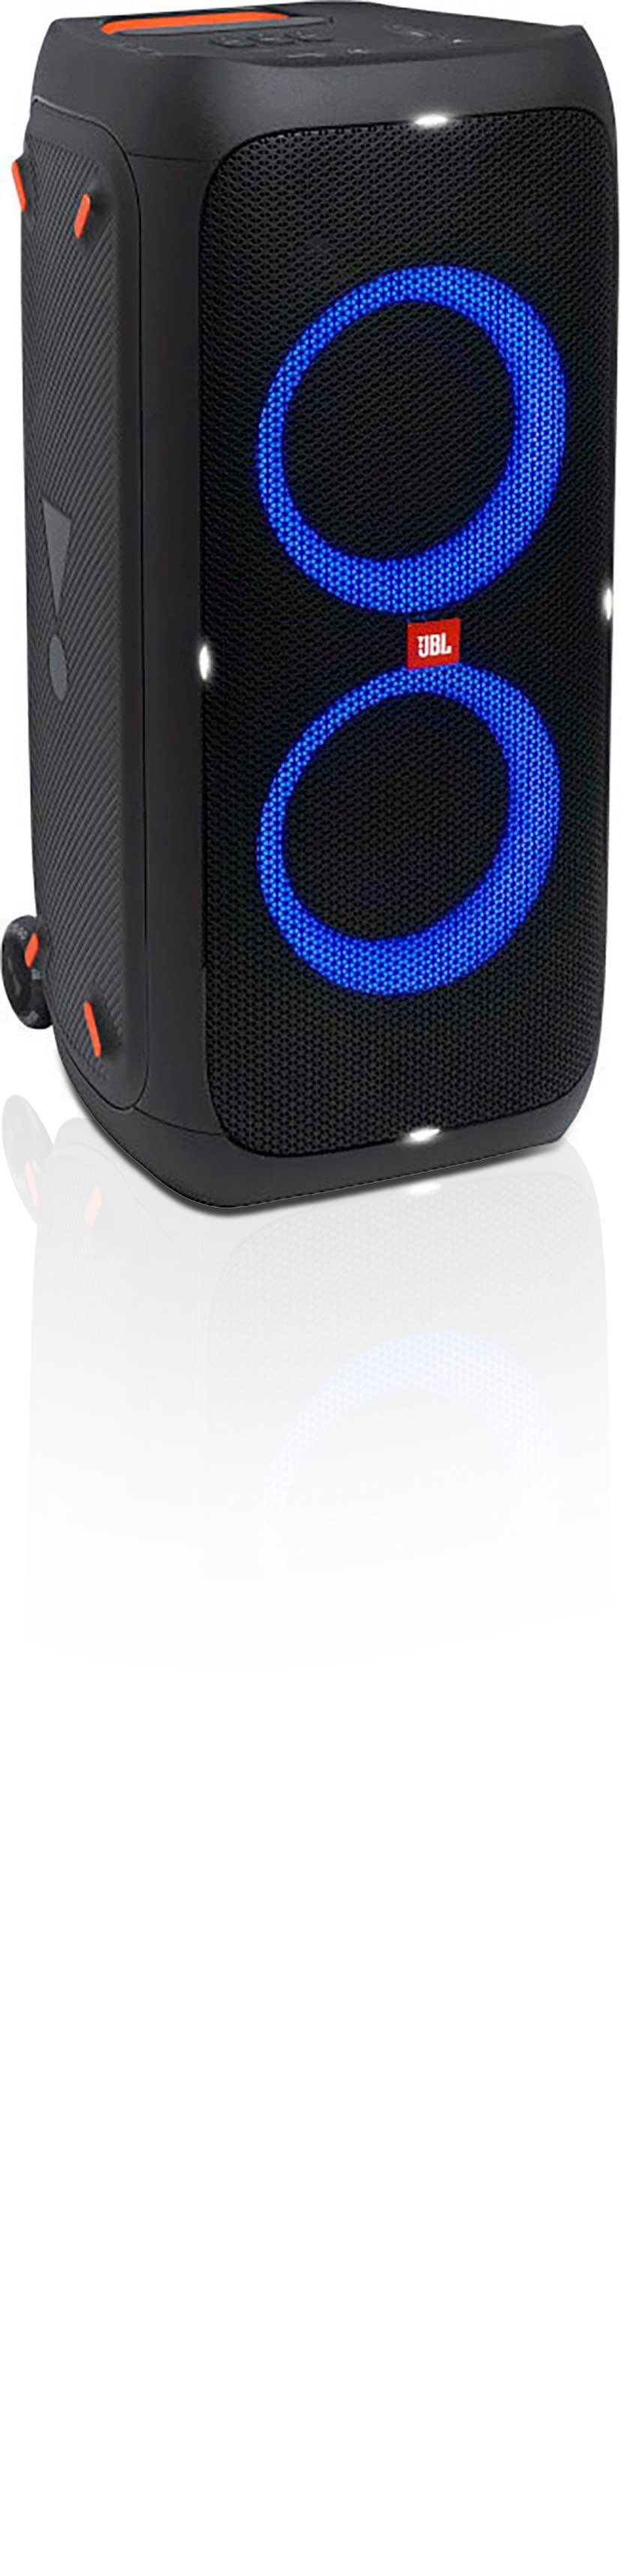 JBL Party-Lautsprecher Lichteffekte, 310 Akku, 240 Box rollbar, USB) Party W, (Bluetooth, tolle